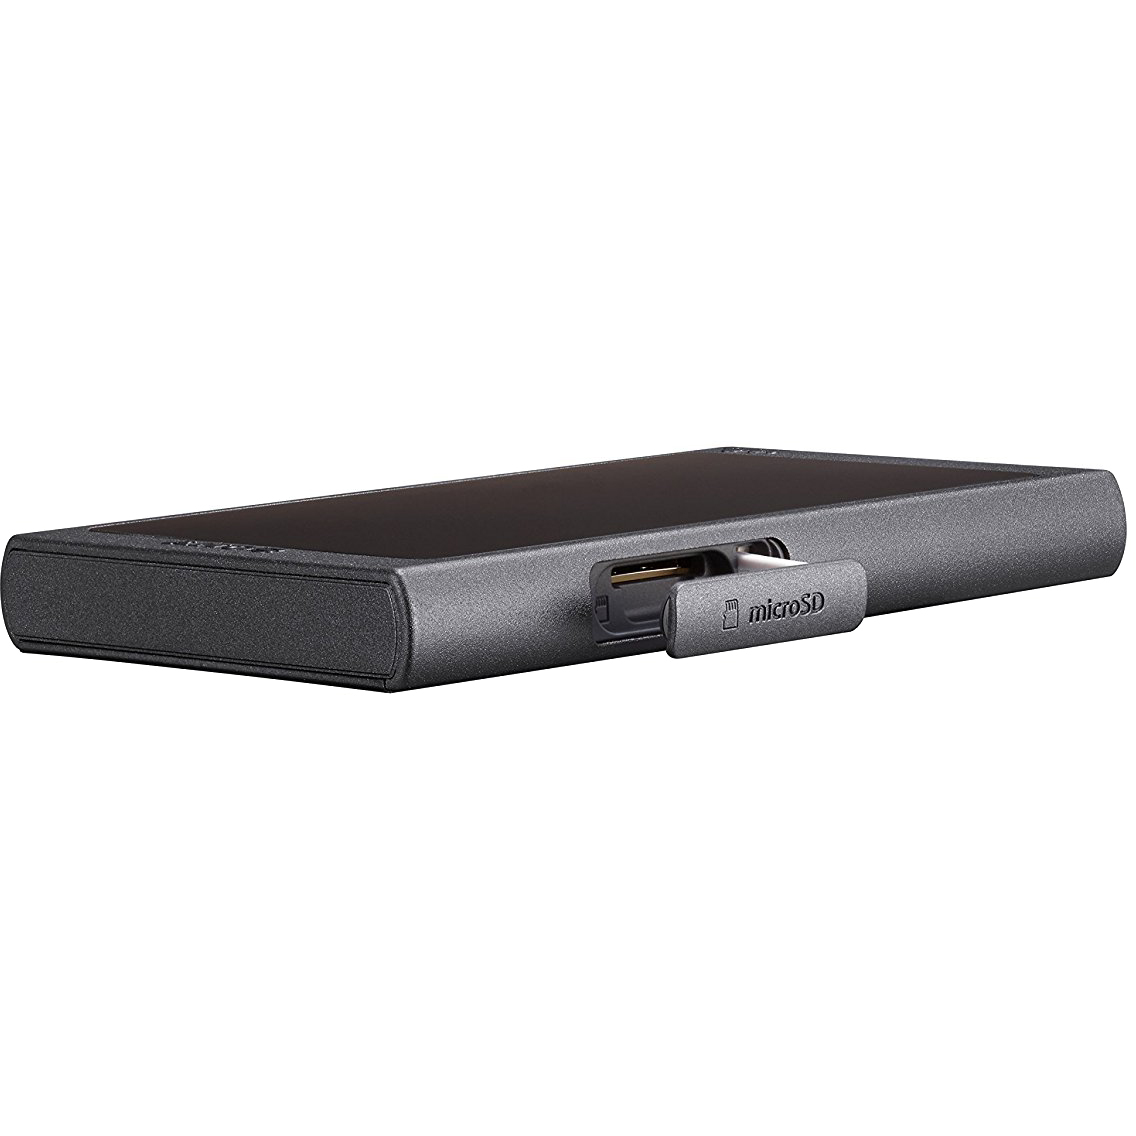 Sony NW-A45/B Walkman with Hi-Res Audio, Black 27242906266 | eBay